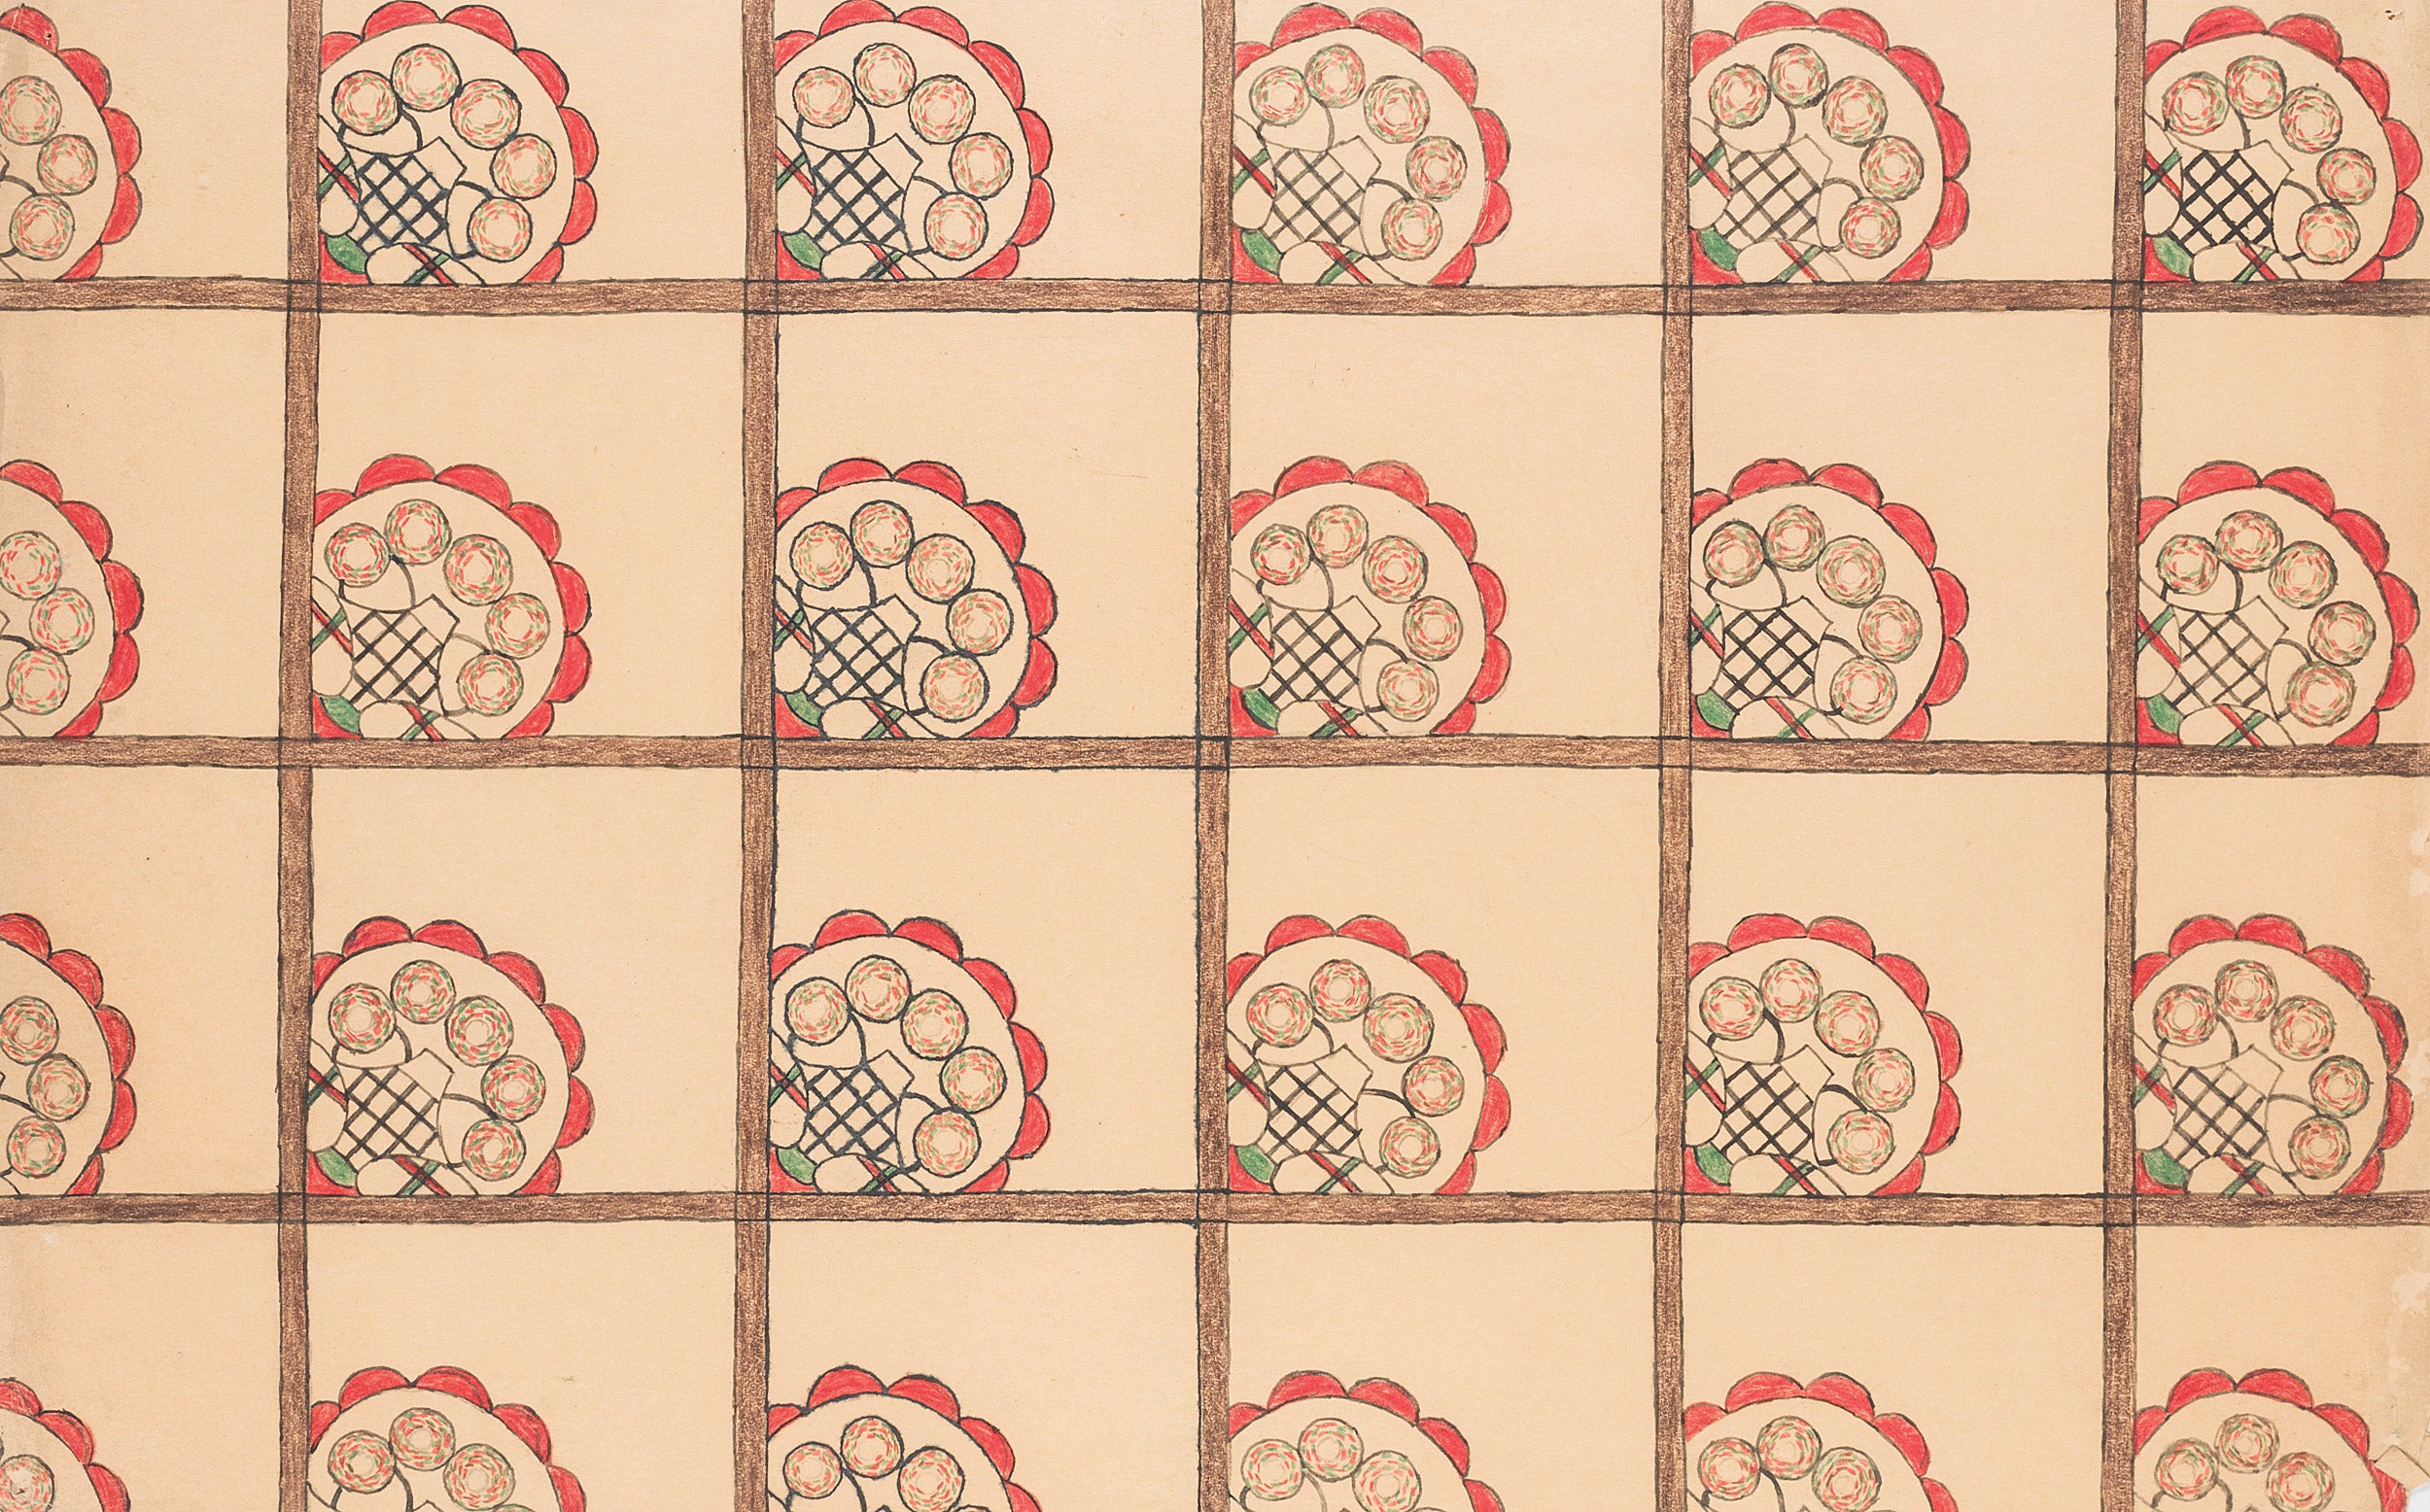 Middle panel of "Helen Wills" is a geometric pattern evoking nets.